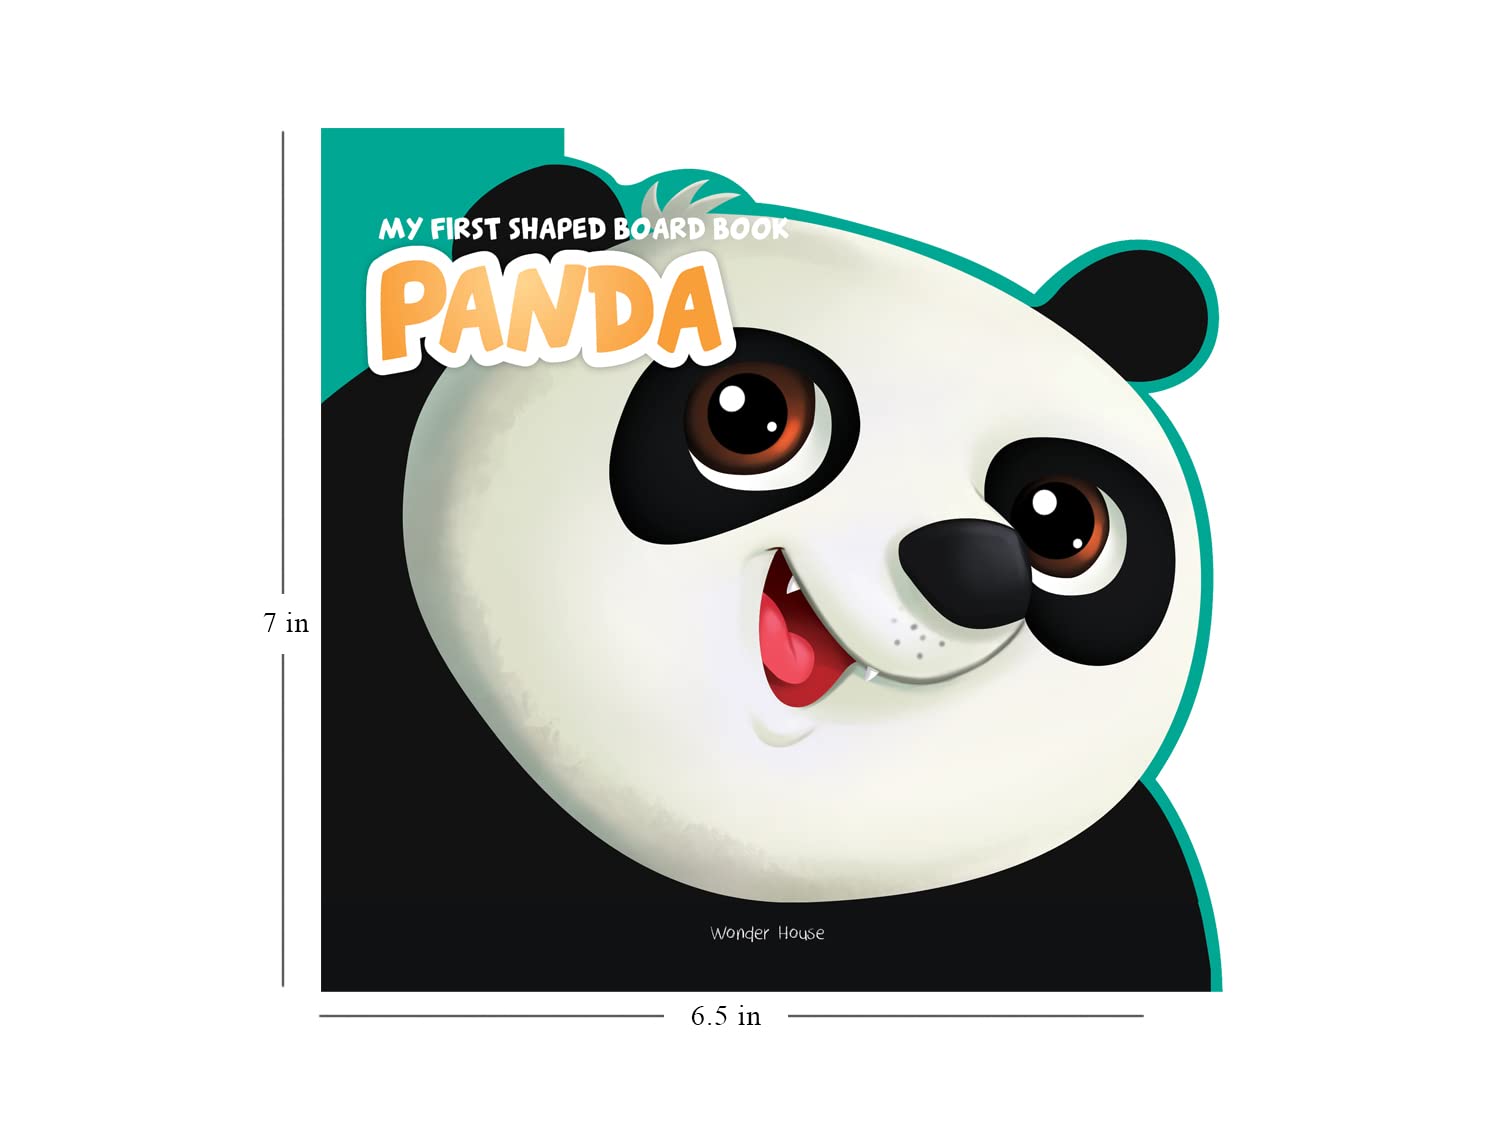 My First Shaped Board Book - Panda